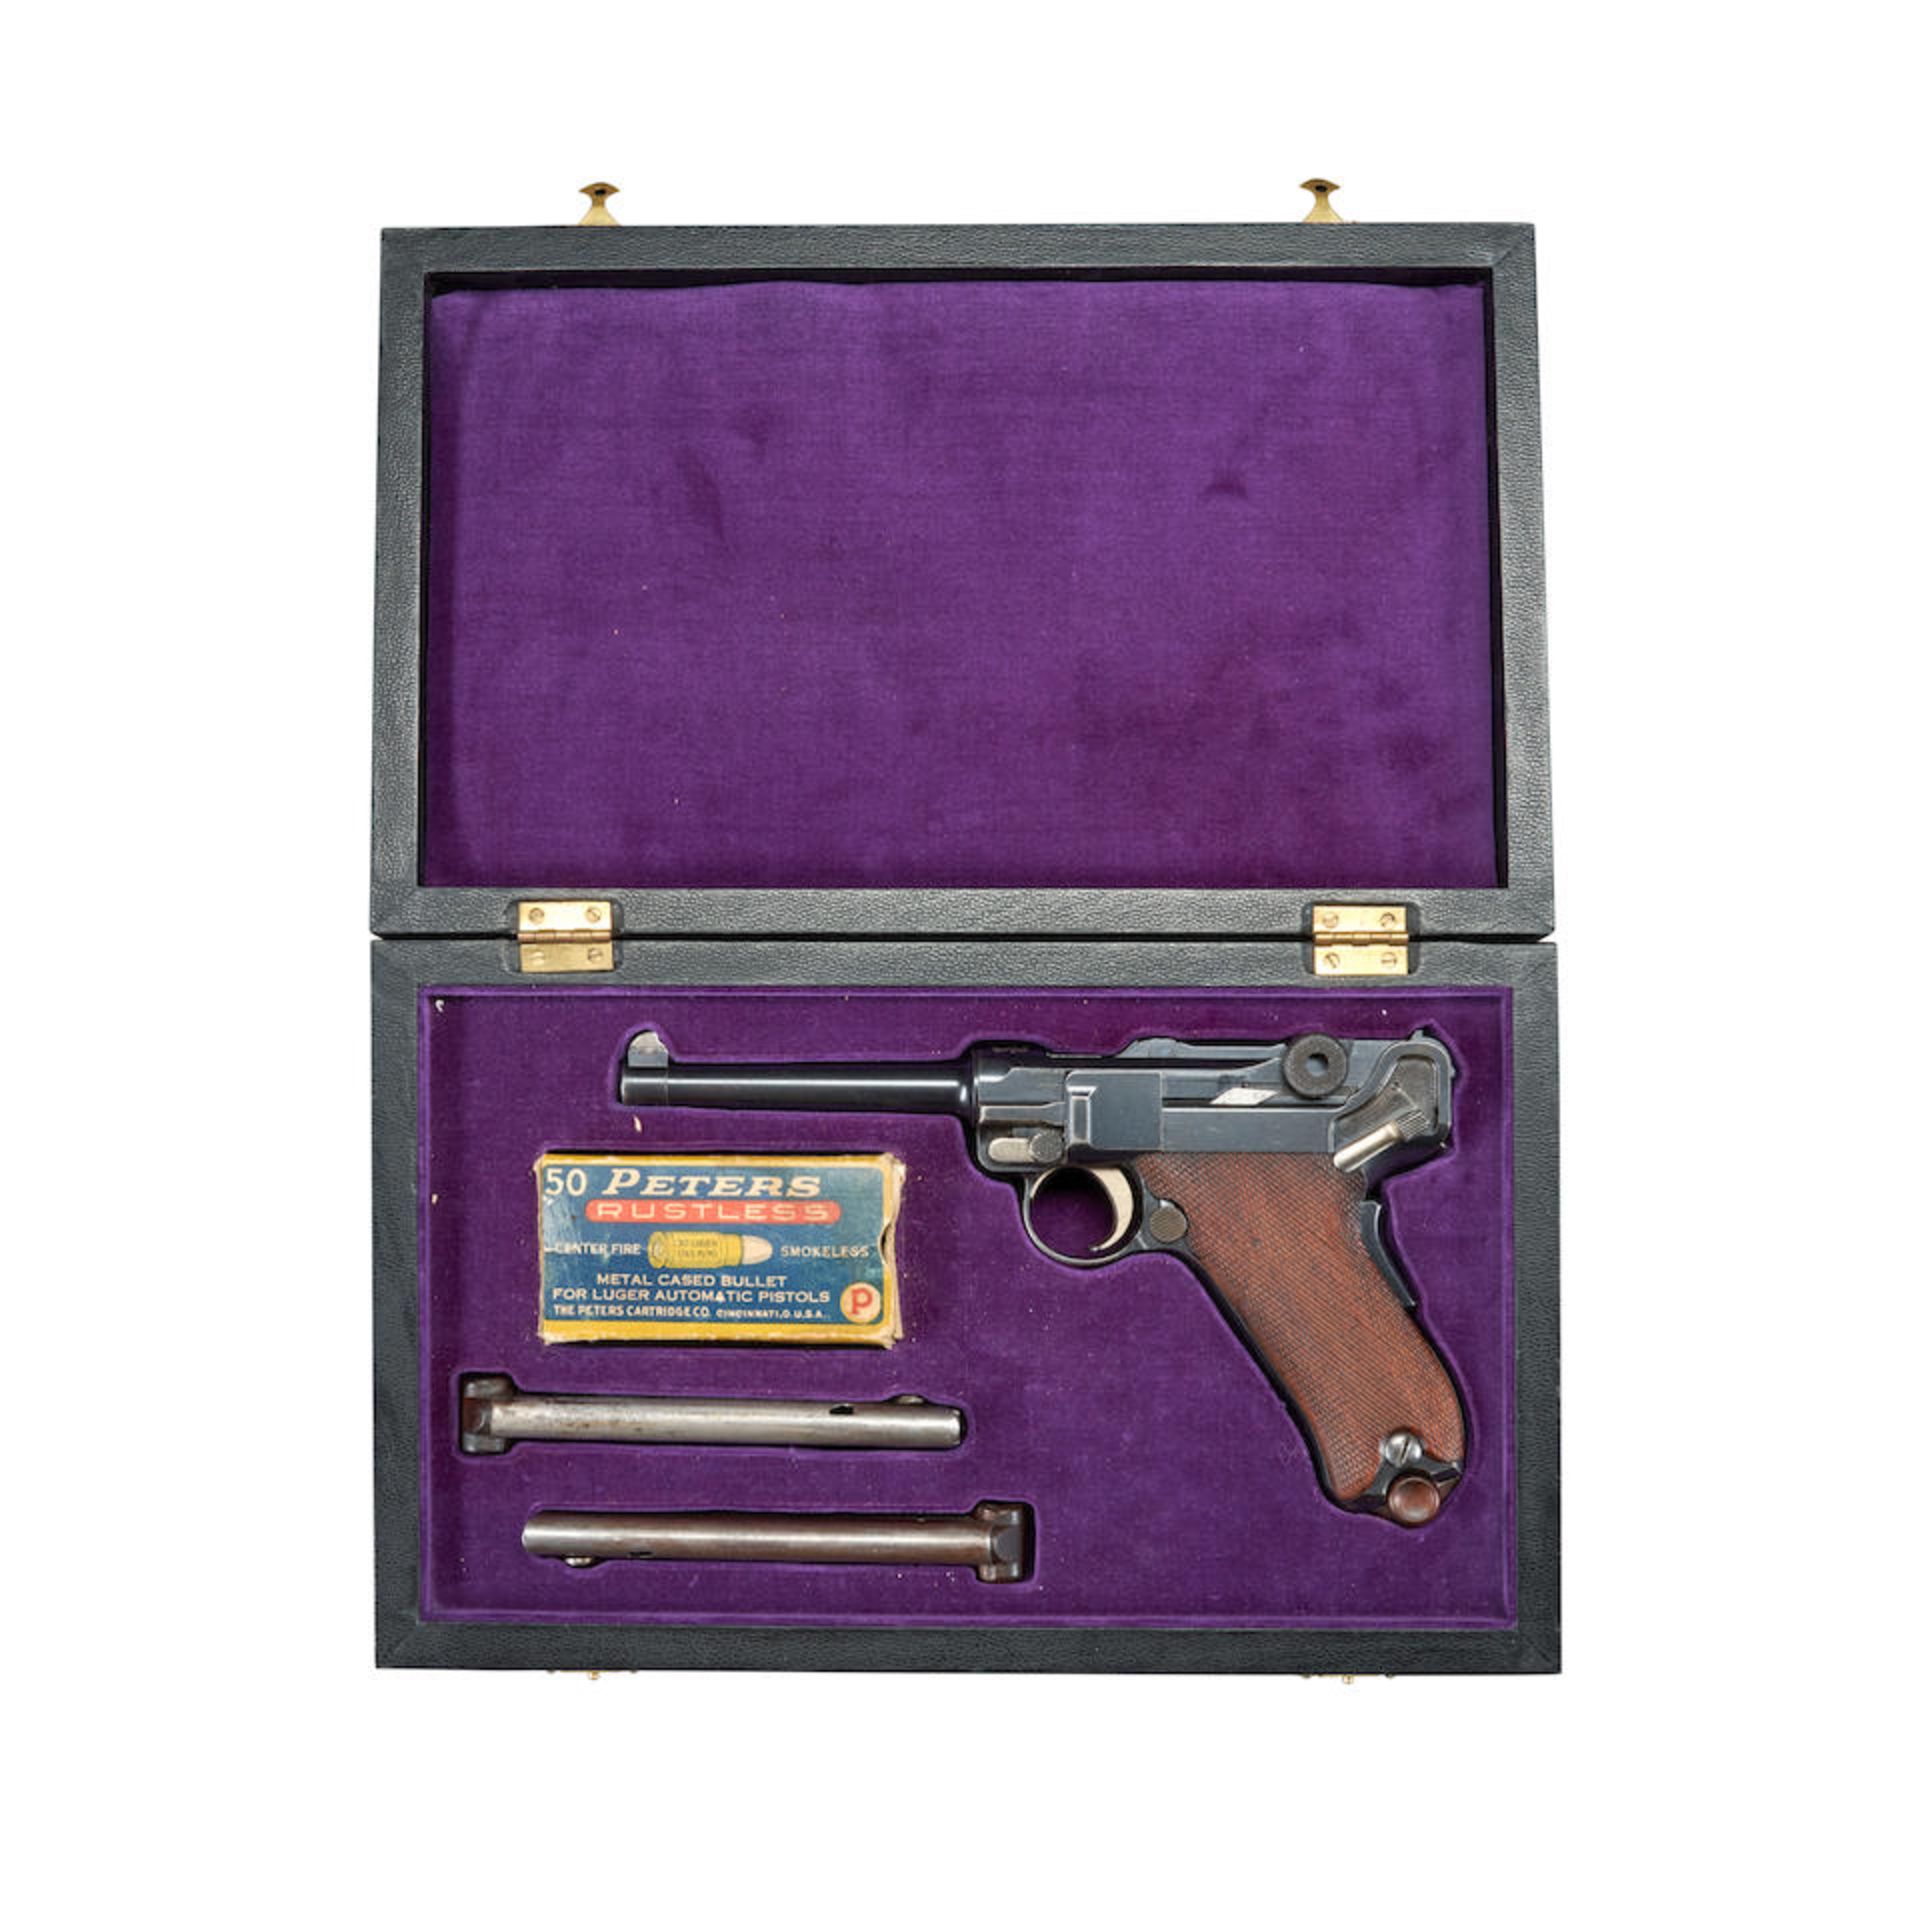 DWM 1906 American Eagle Luger Semi-Automatic Pistol and Case,